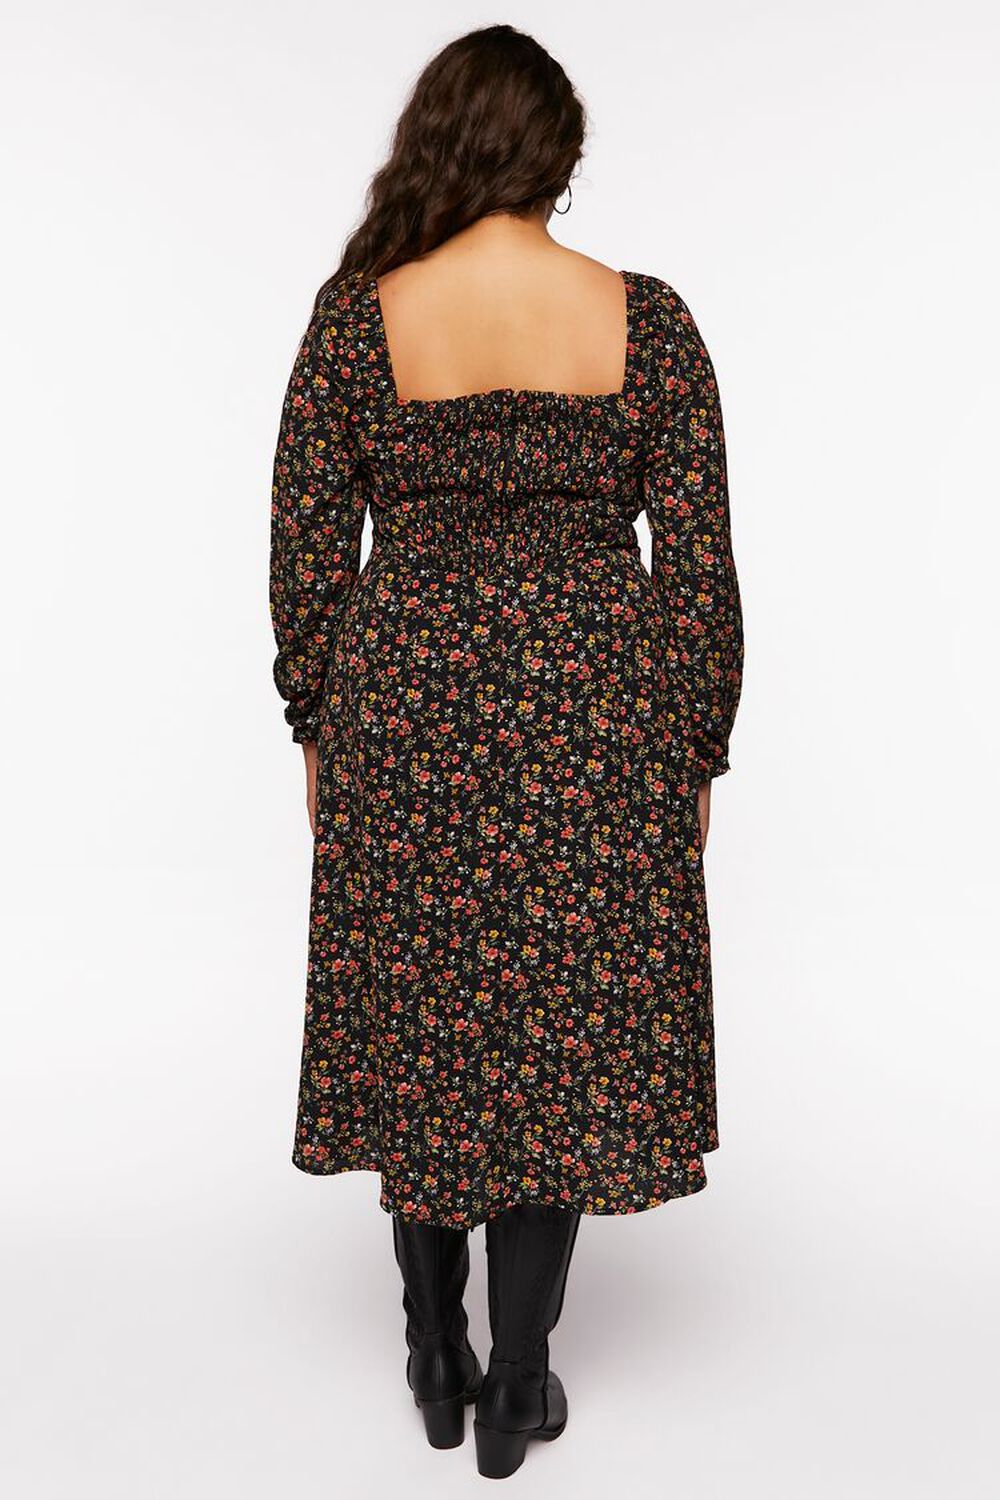 BLACK/MULTI Plus Size Ditsy Floral Midi Dress, image 3